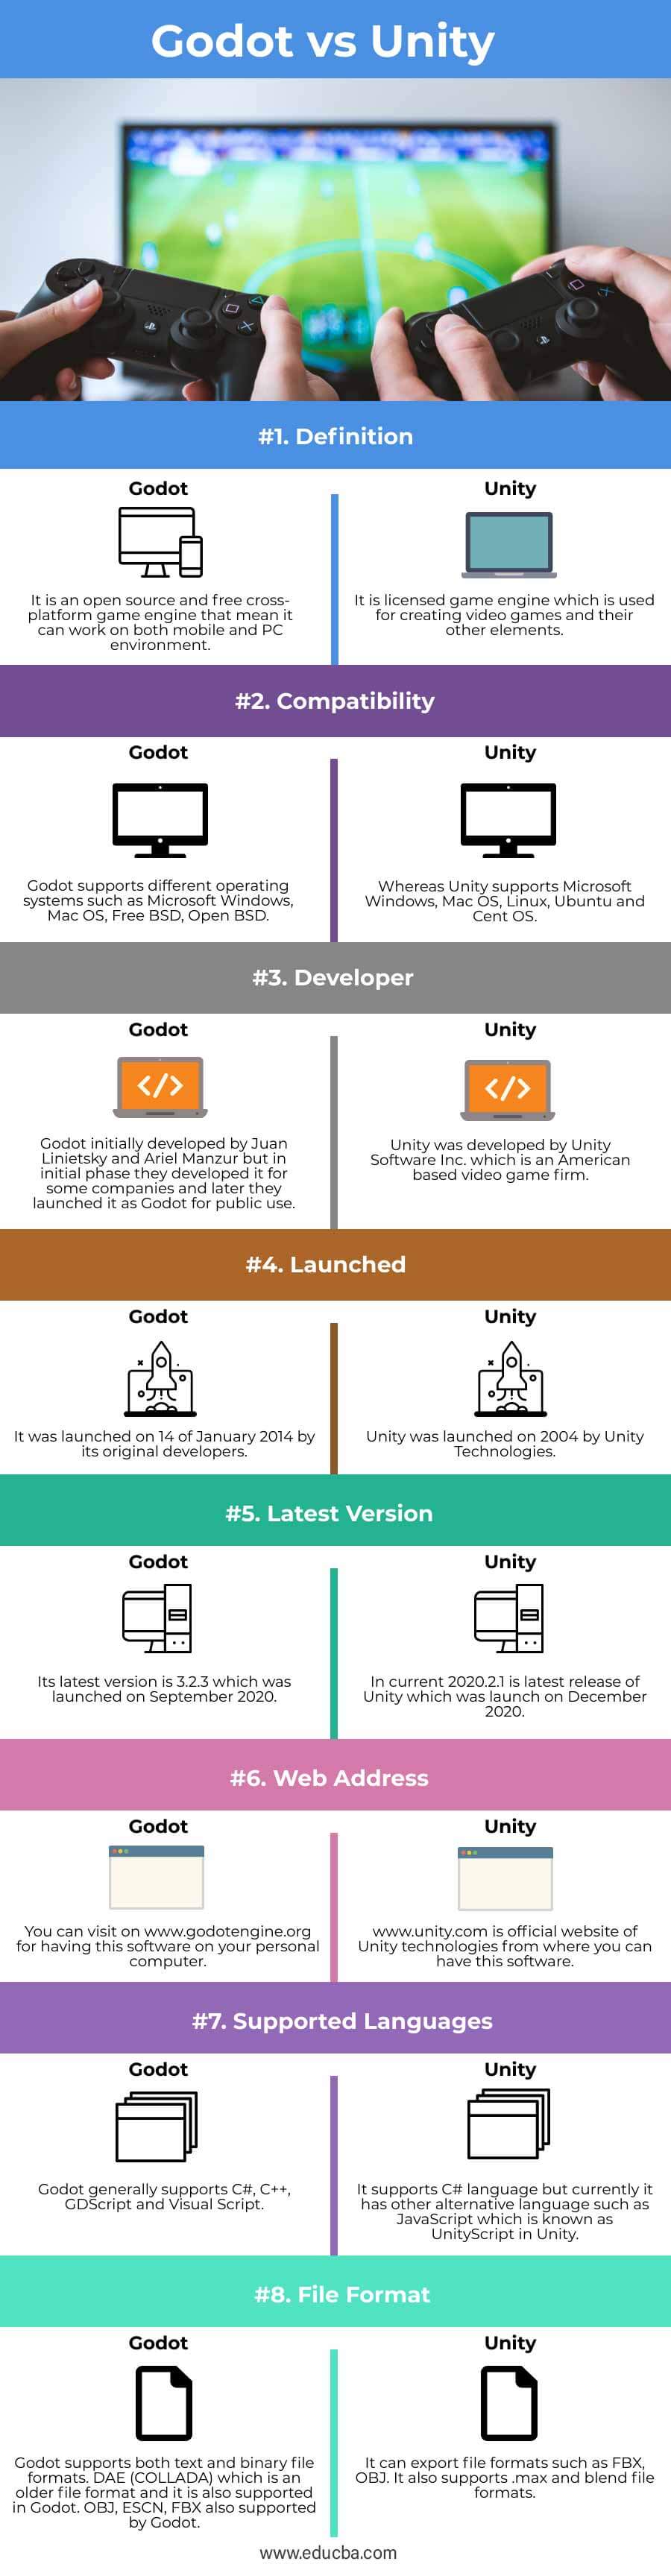 Godot-vs-Unity-info